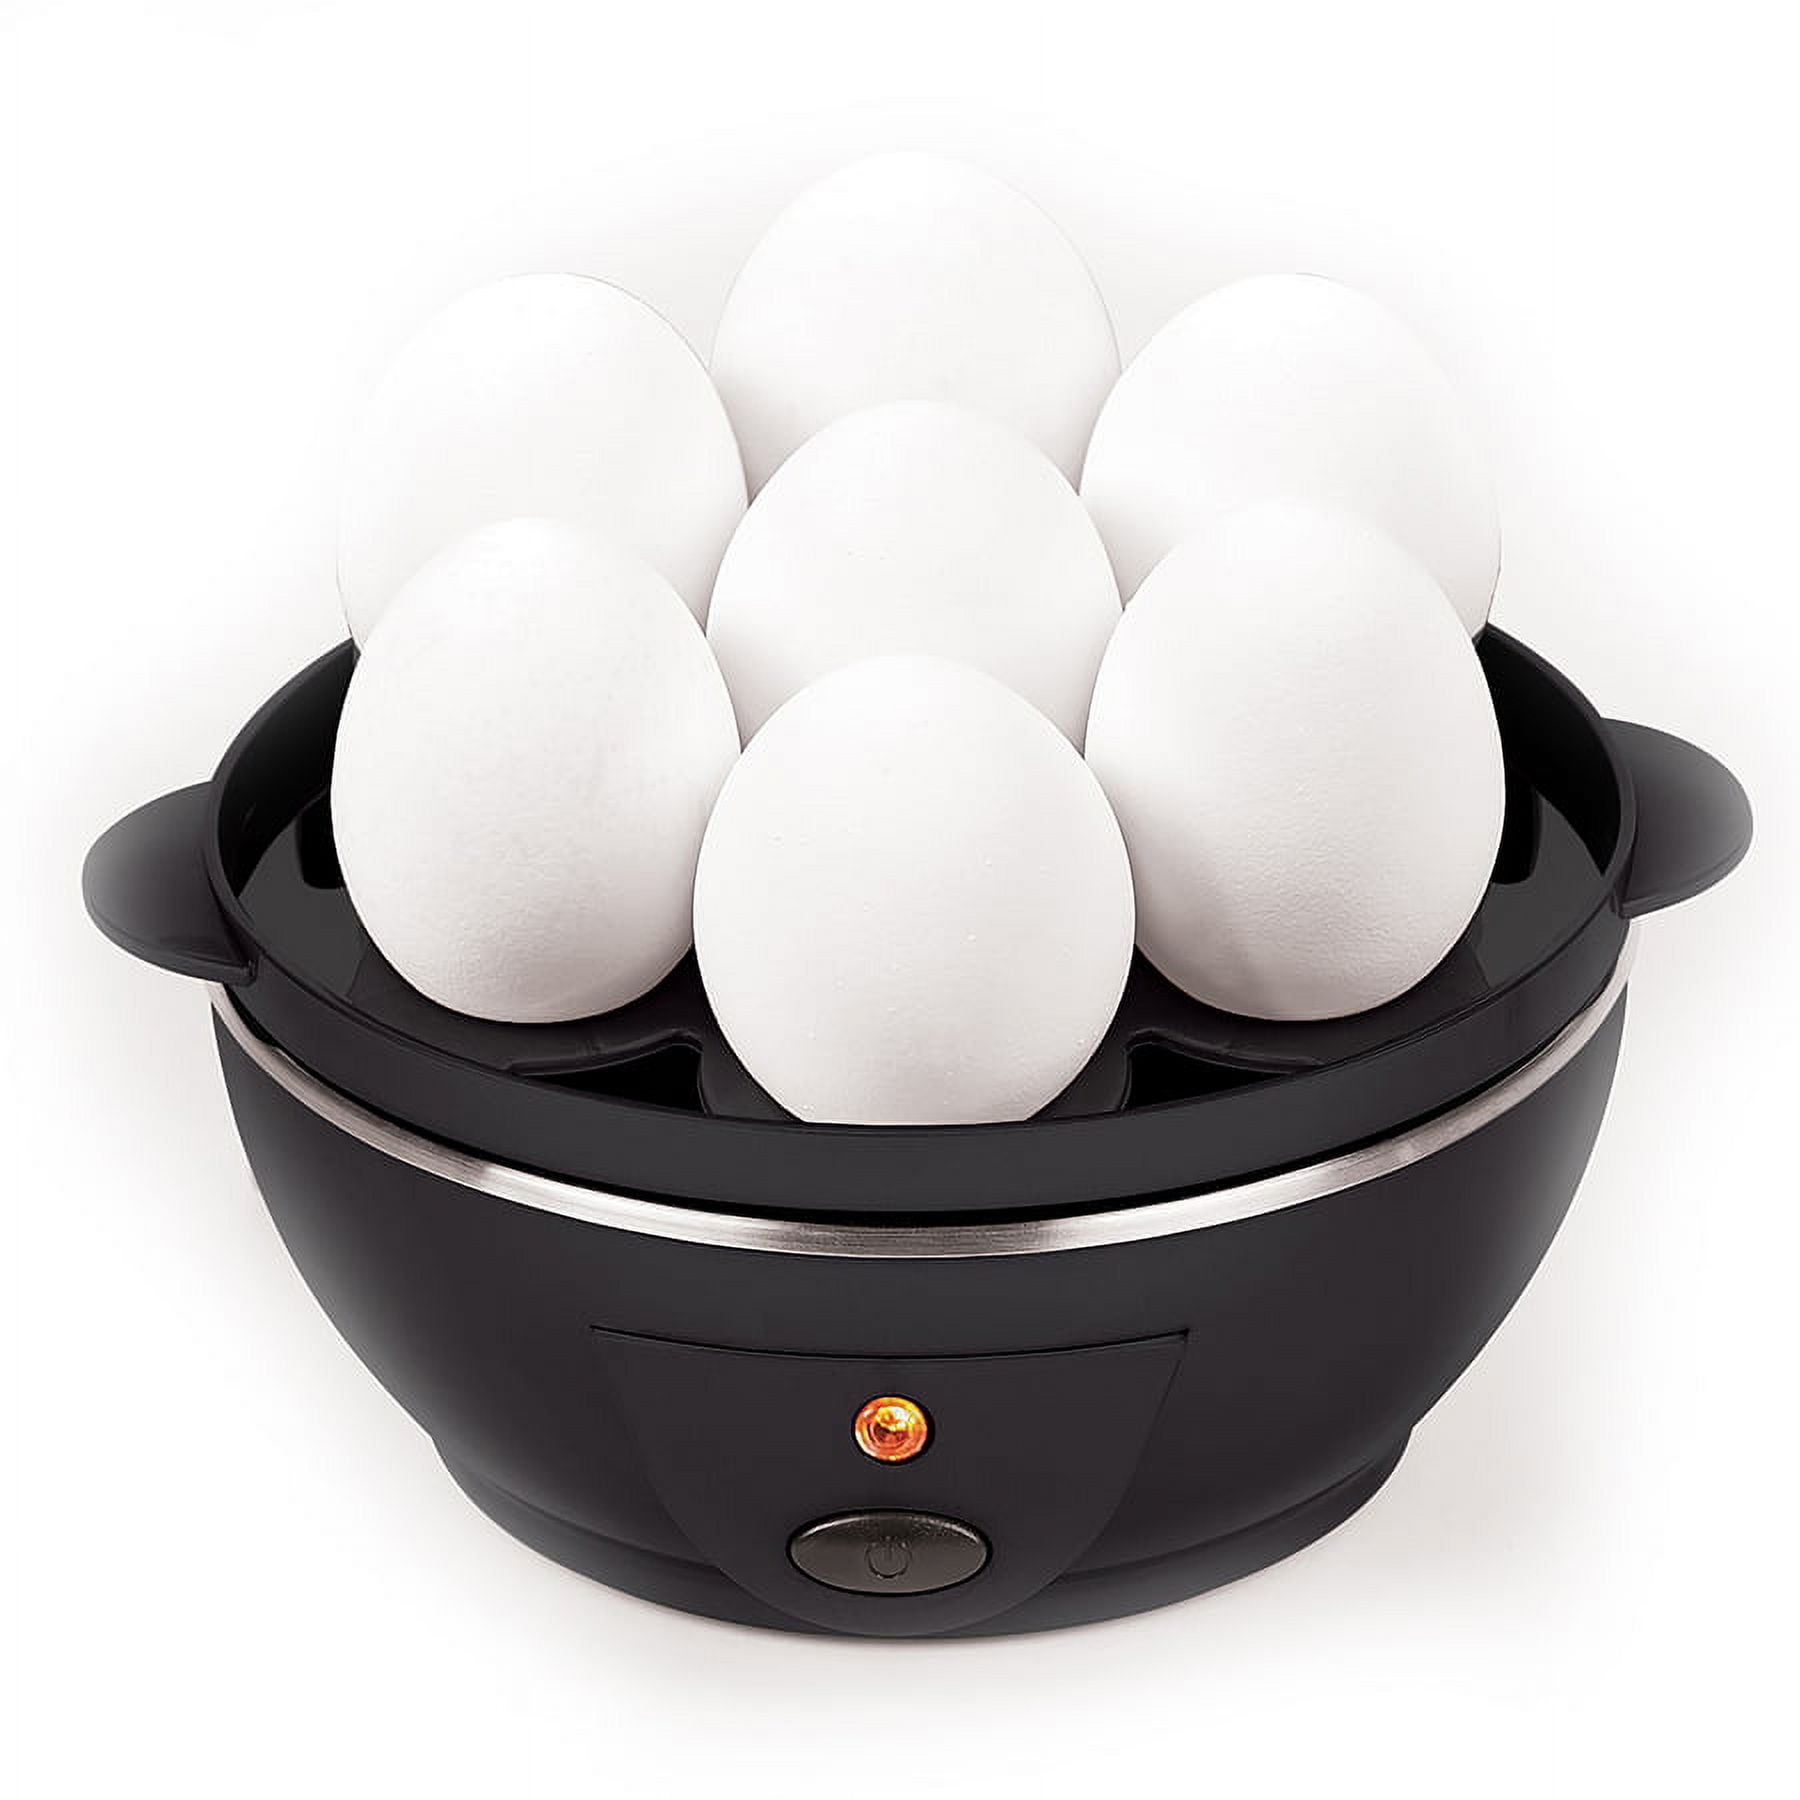 KALWEL,Egg Boiler Machine,Electric Egg Cooker,Poached Egg Maker,Hard Boiled  Egg Cooker,With Automatic Shut-Off Function For Omelet,Soft,Medium And